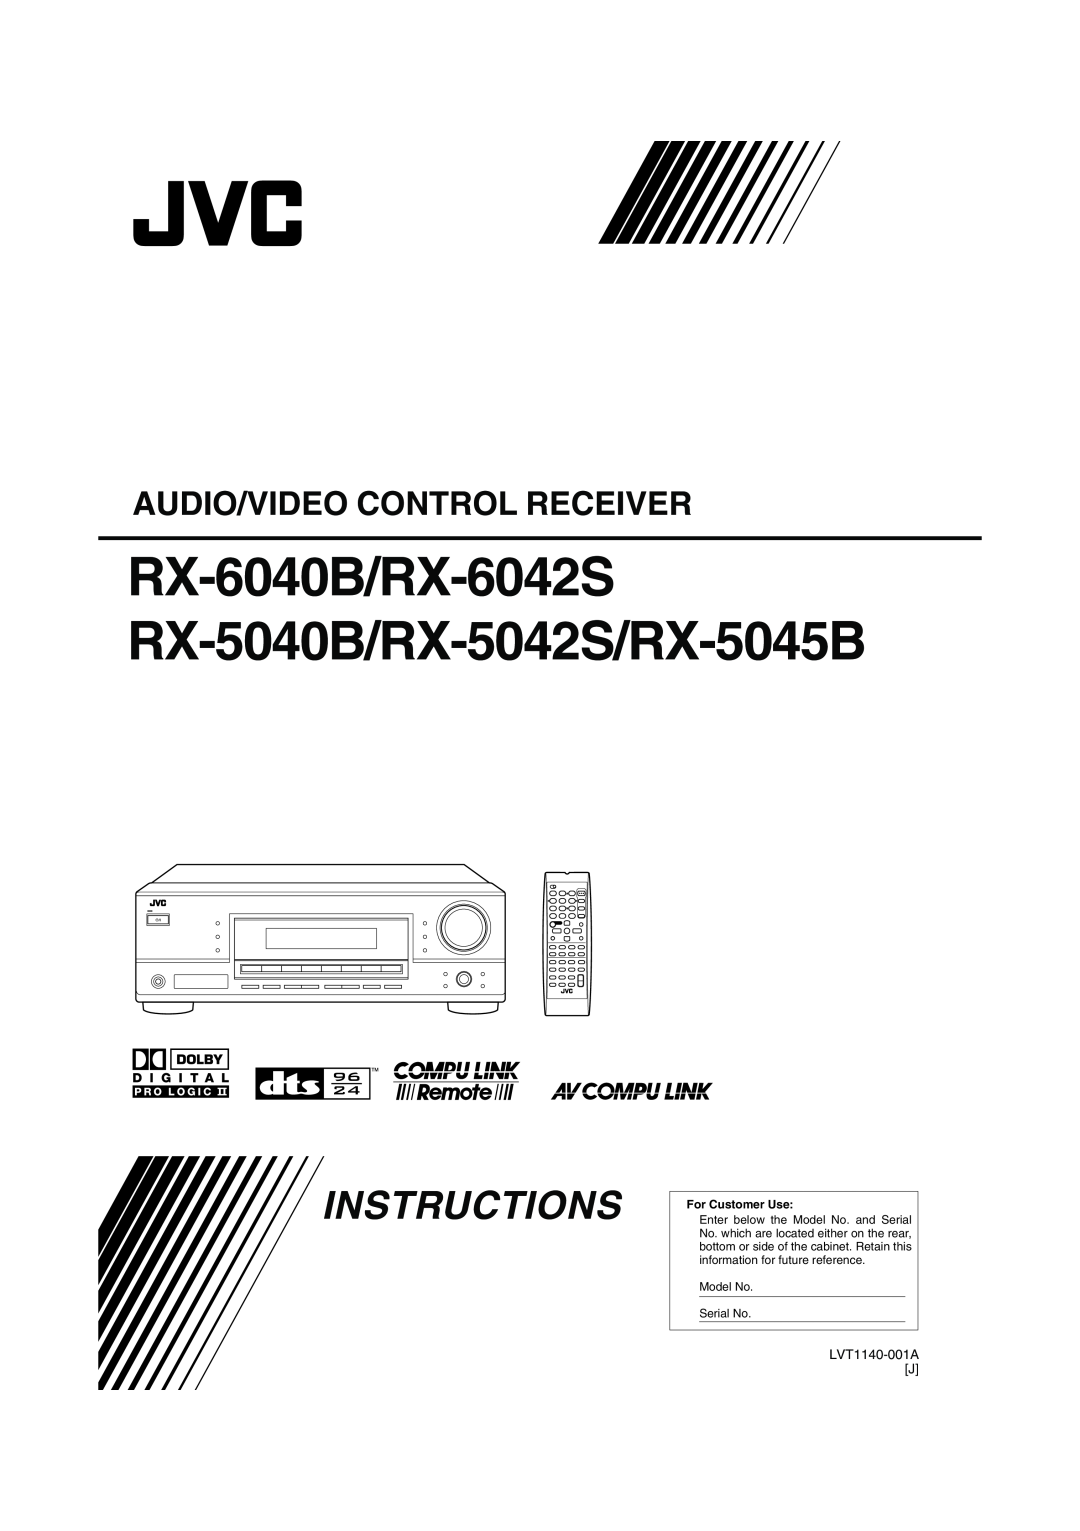 JVC manual RX-6040B/RX-6042S RX-5040B/RX-5042S/RX-5045B, Instructions, Audio/Video Control Receiver, For Customer Use 